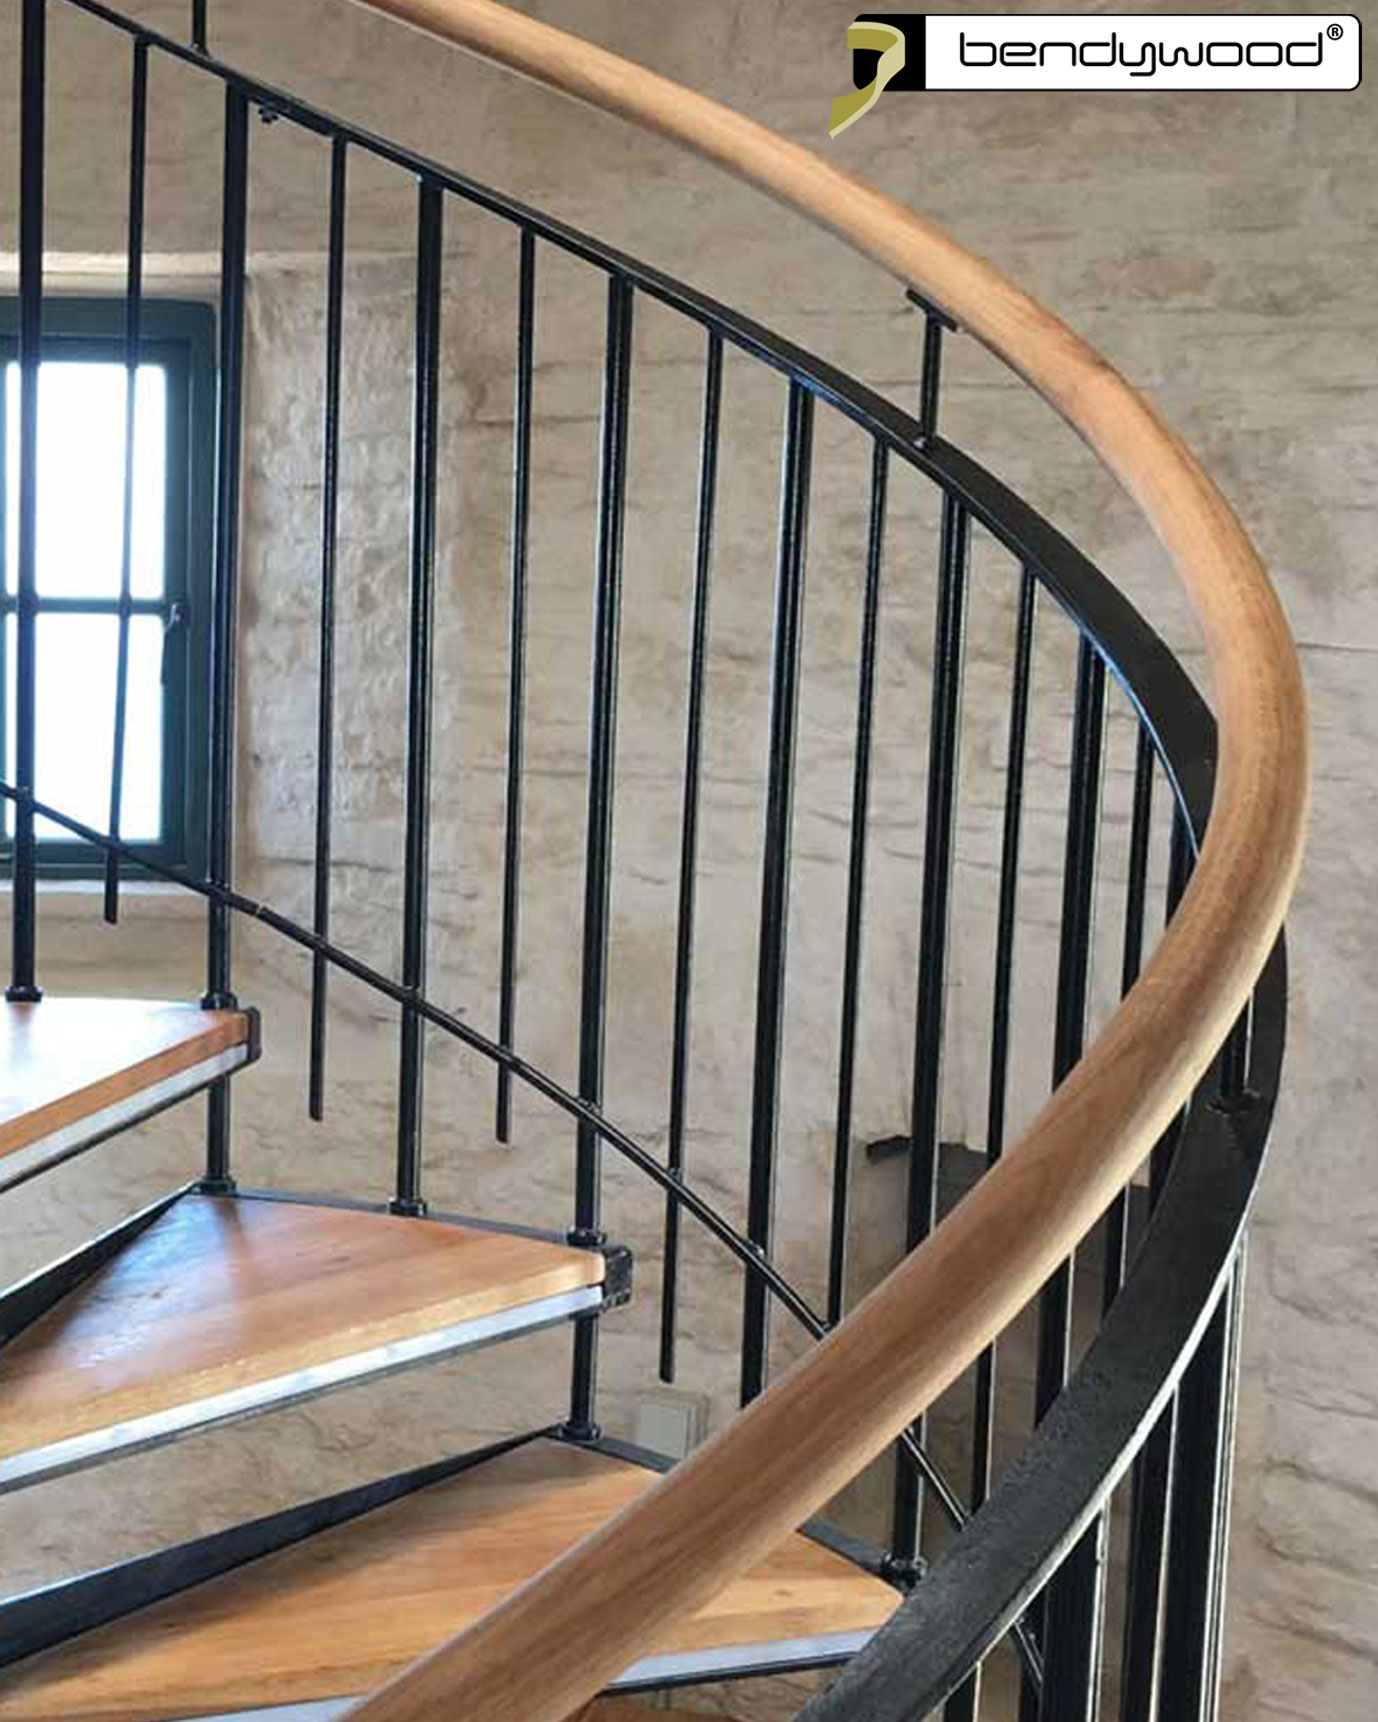 How to bend Bendywood® handrails